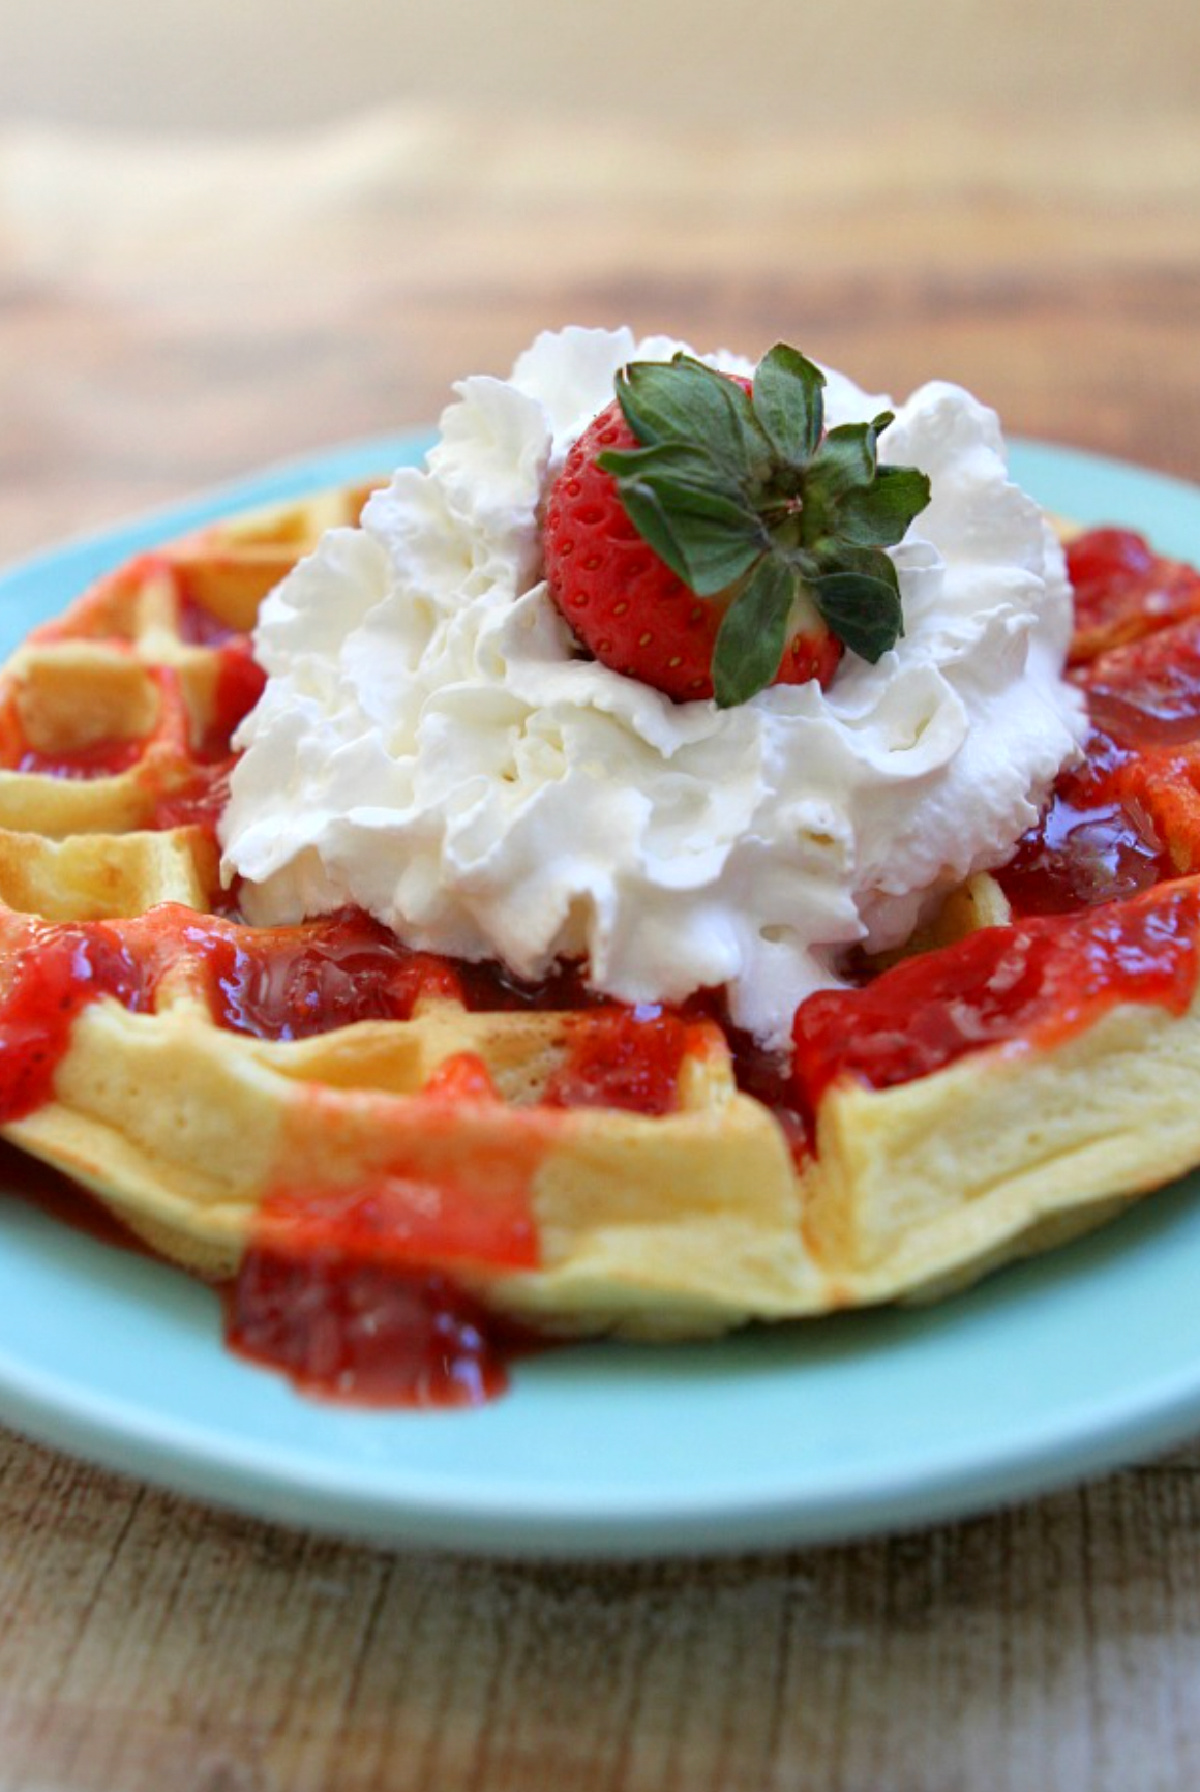 strawberry topped waffle